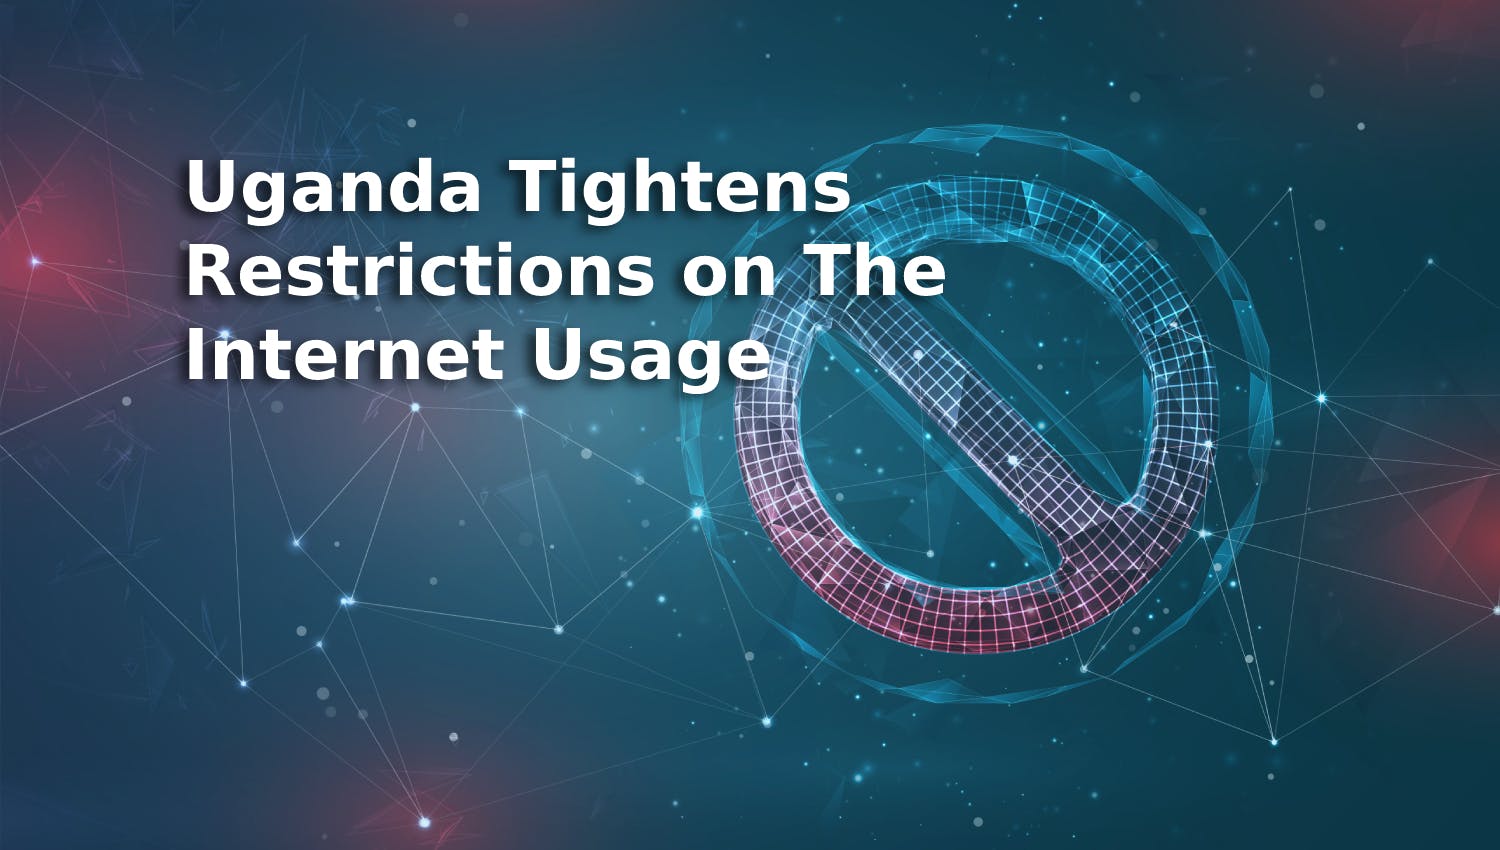 Uganda Tightens Restrictions on The Internet Usage